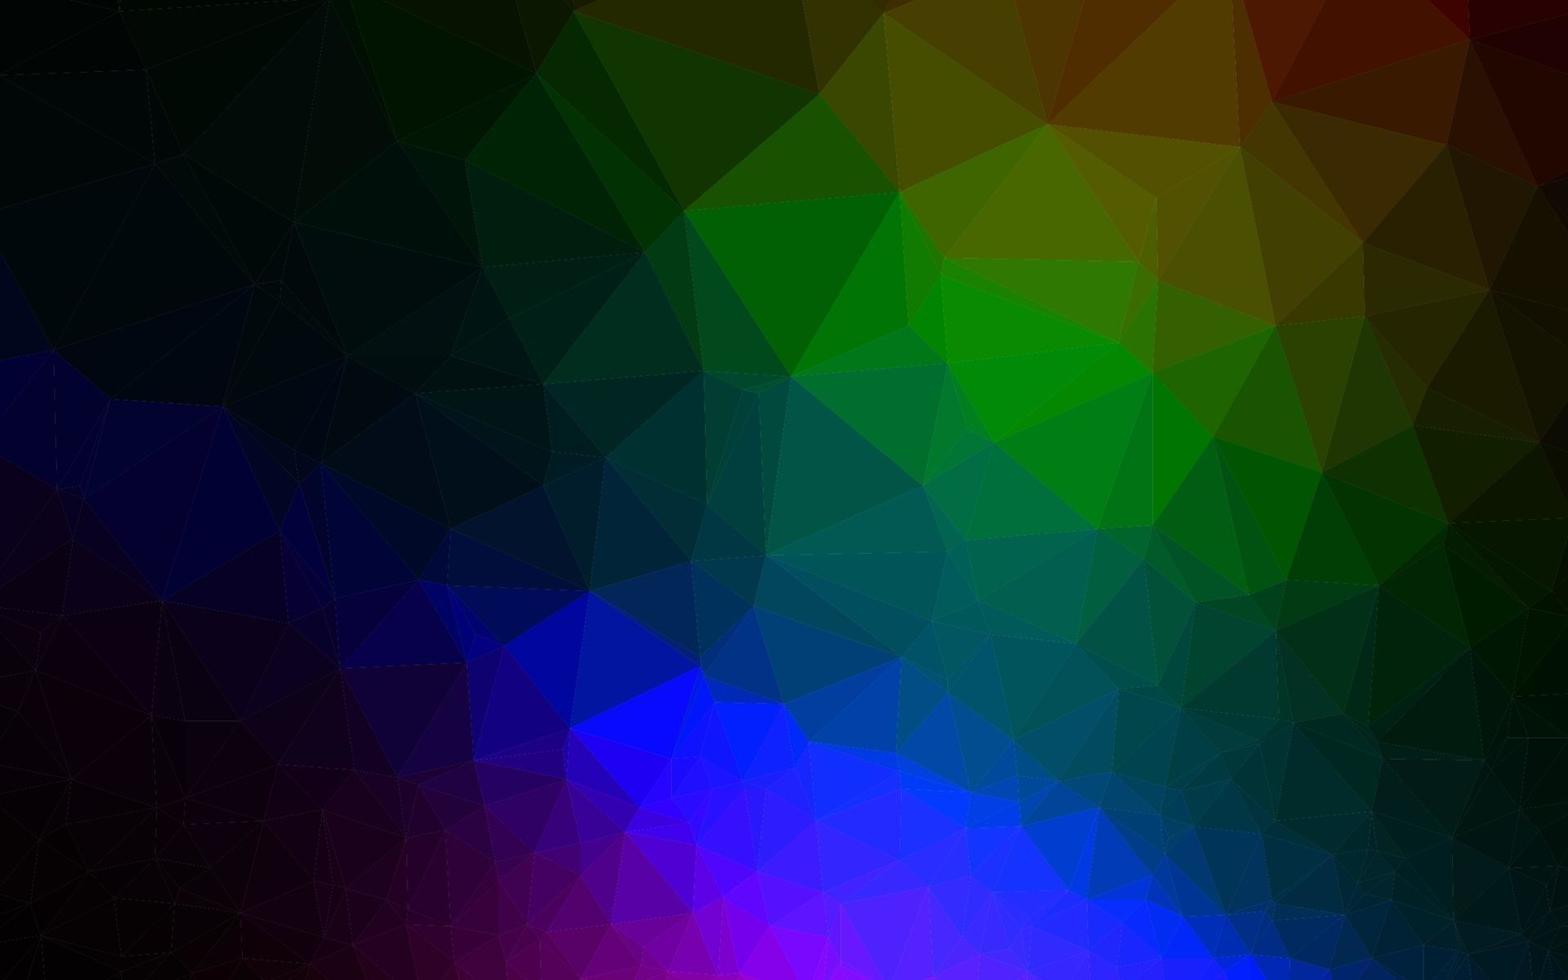 mörk flerfärgad, regnbåge vektor lysande triangulär mall.